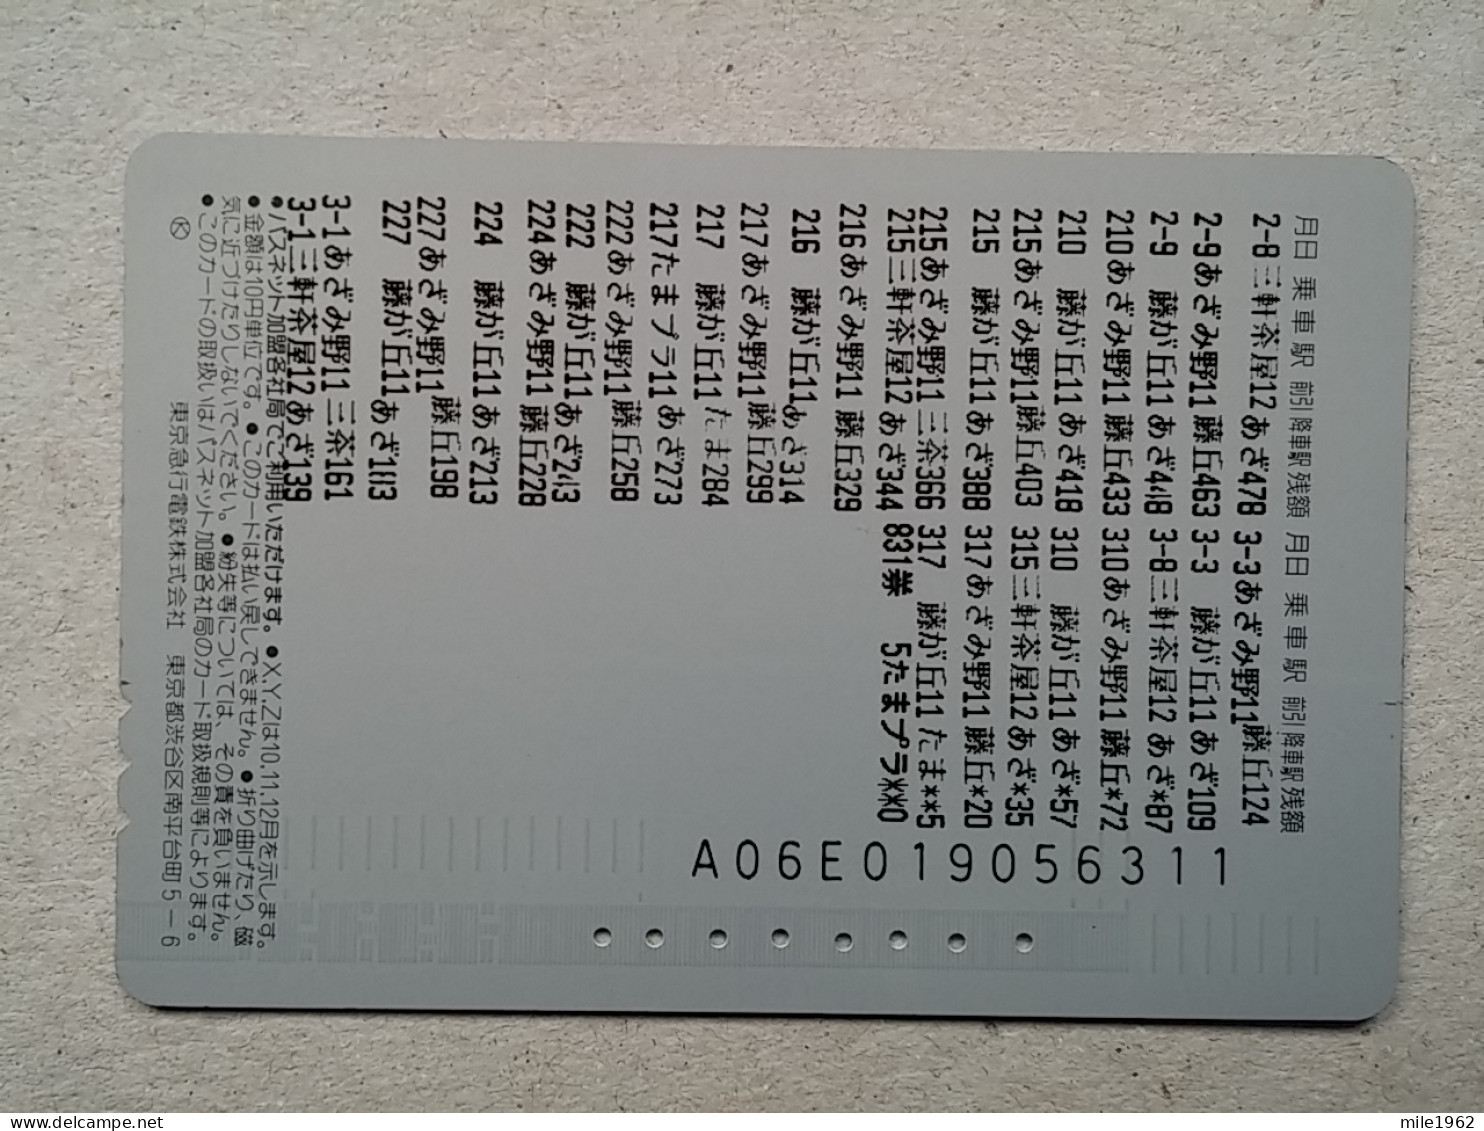 T-608 - JAPAN, Japon, Nipon, Carte Prepayee, Prepaid Card, CARD, RAILWAY, TRAIN, CHEMIN DE FER - Treinen